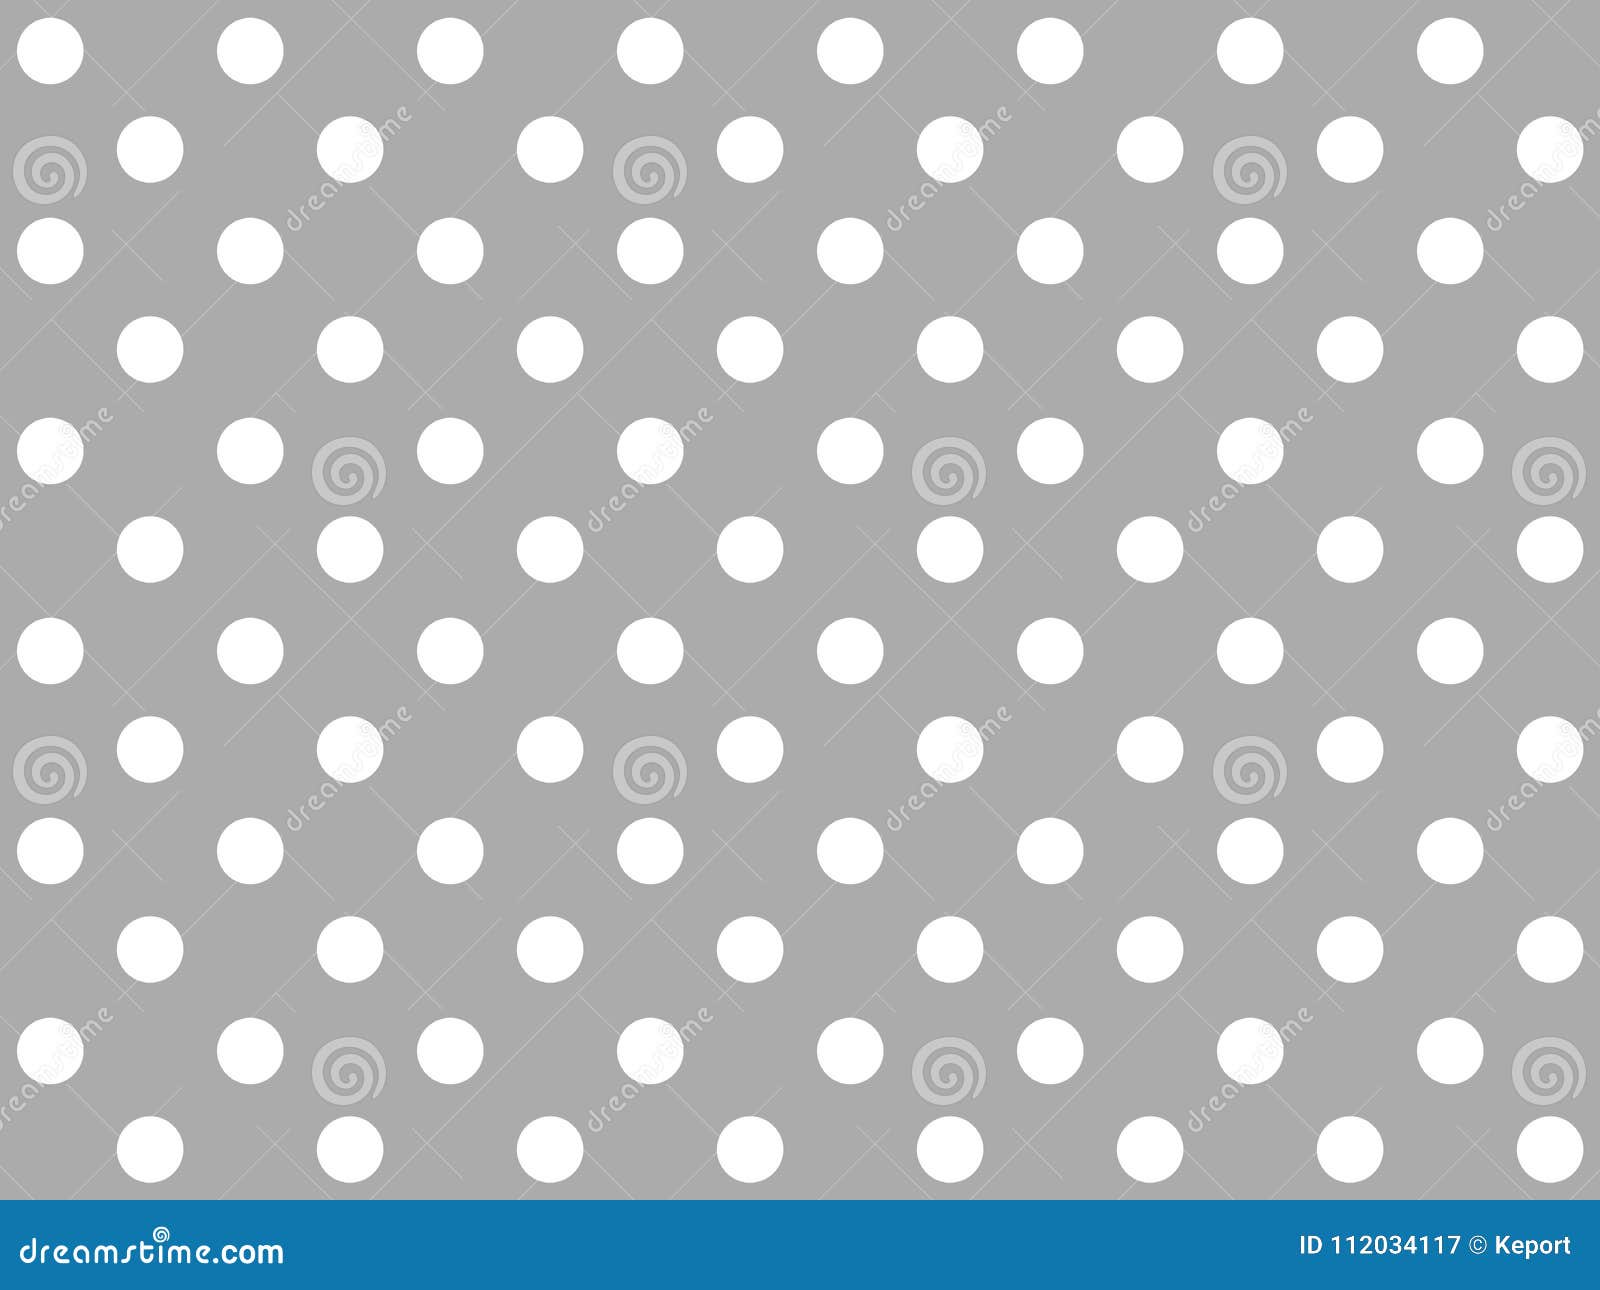 Light Grey Polka Dot Background Stock Illustration - Illustration of light,  pattern: 112034117